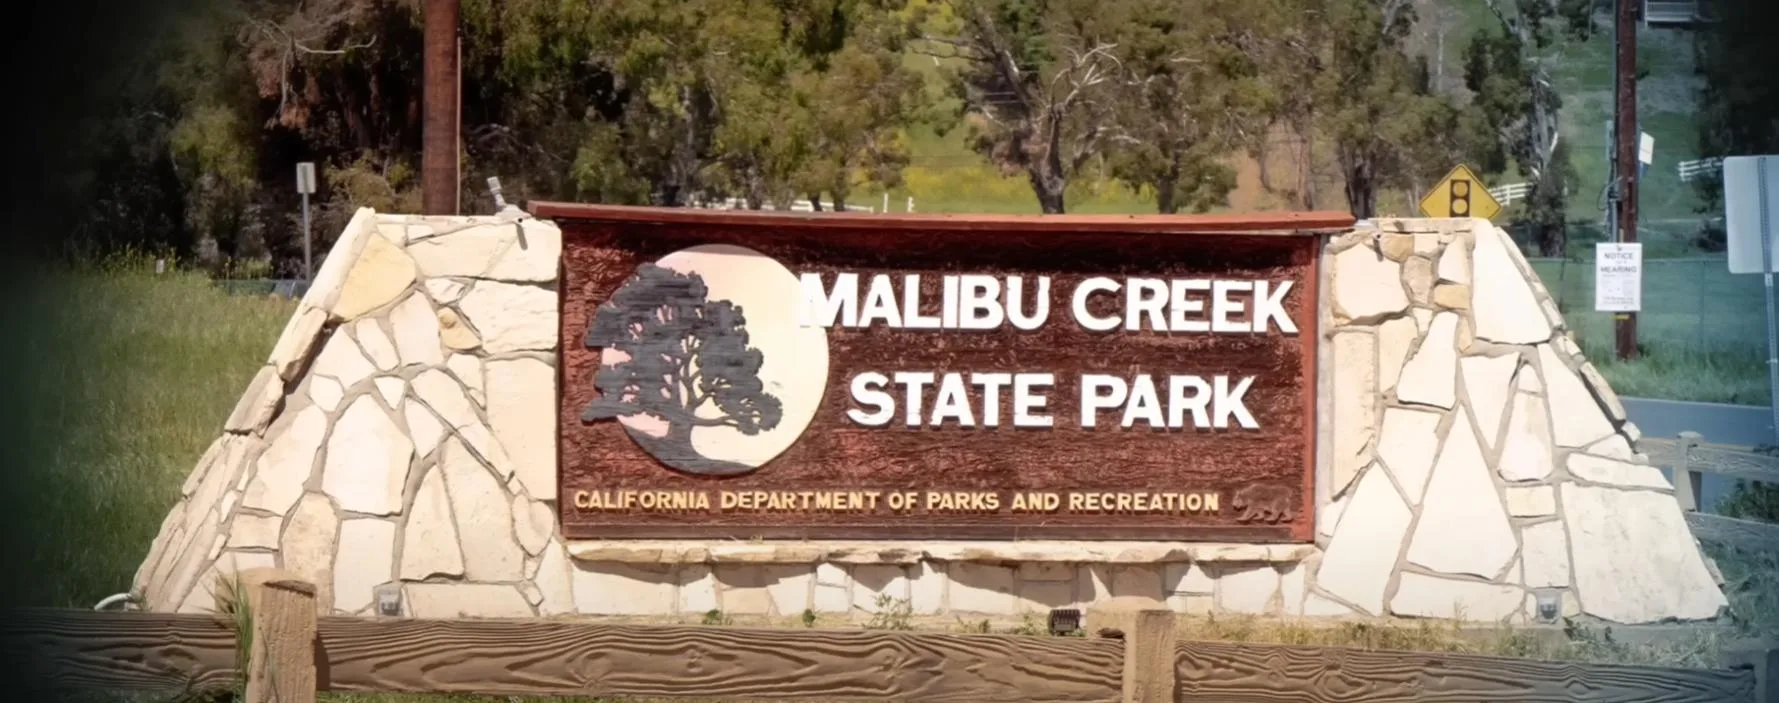 Entrance to Malibu Creek State Park